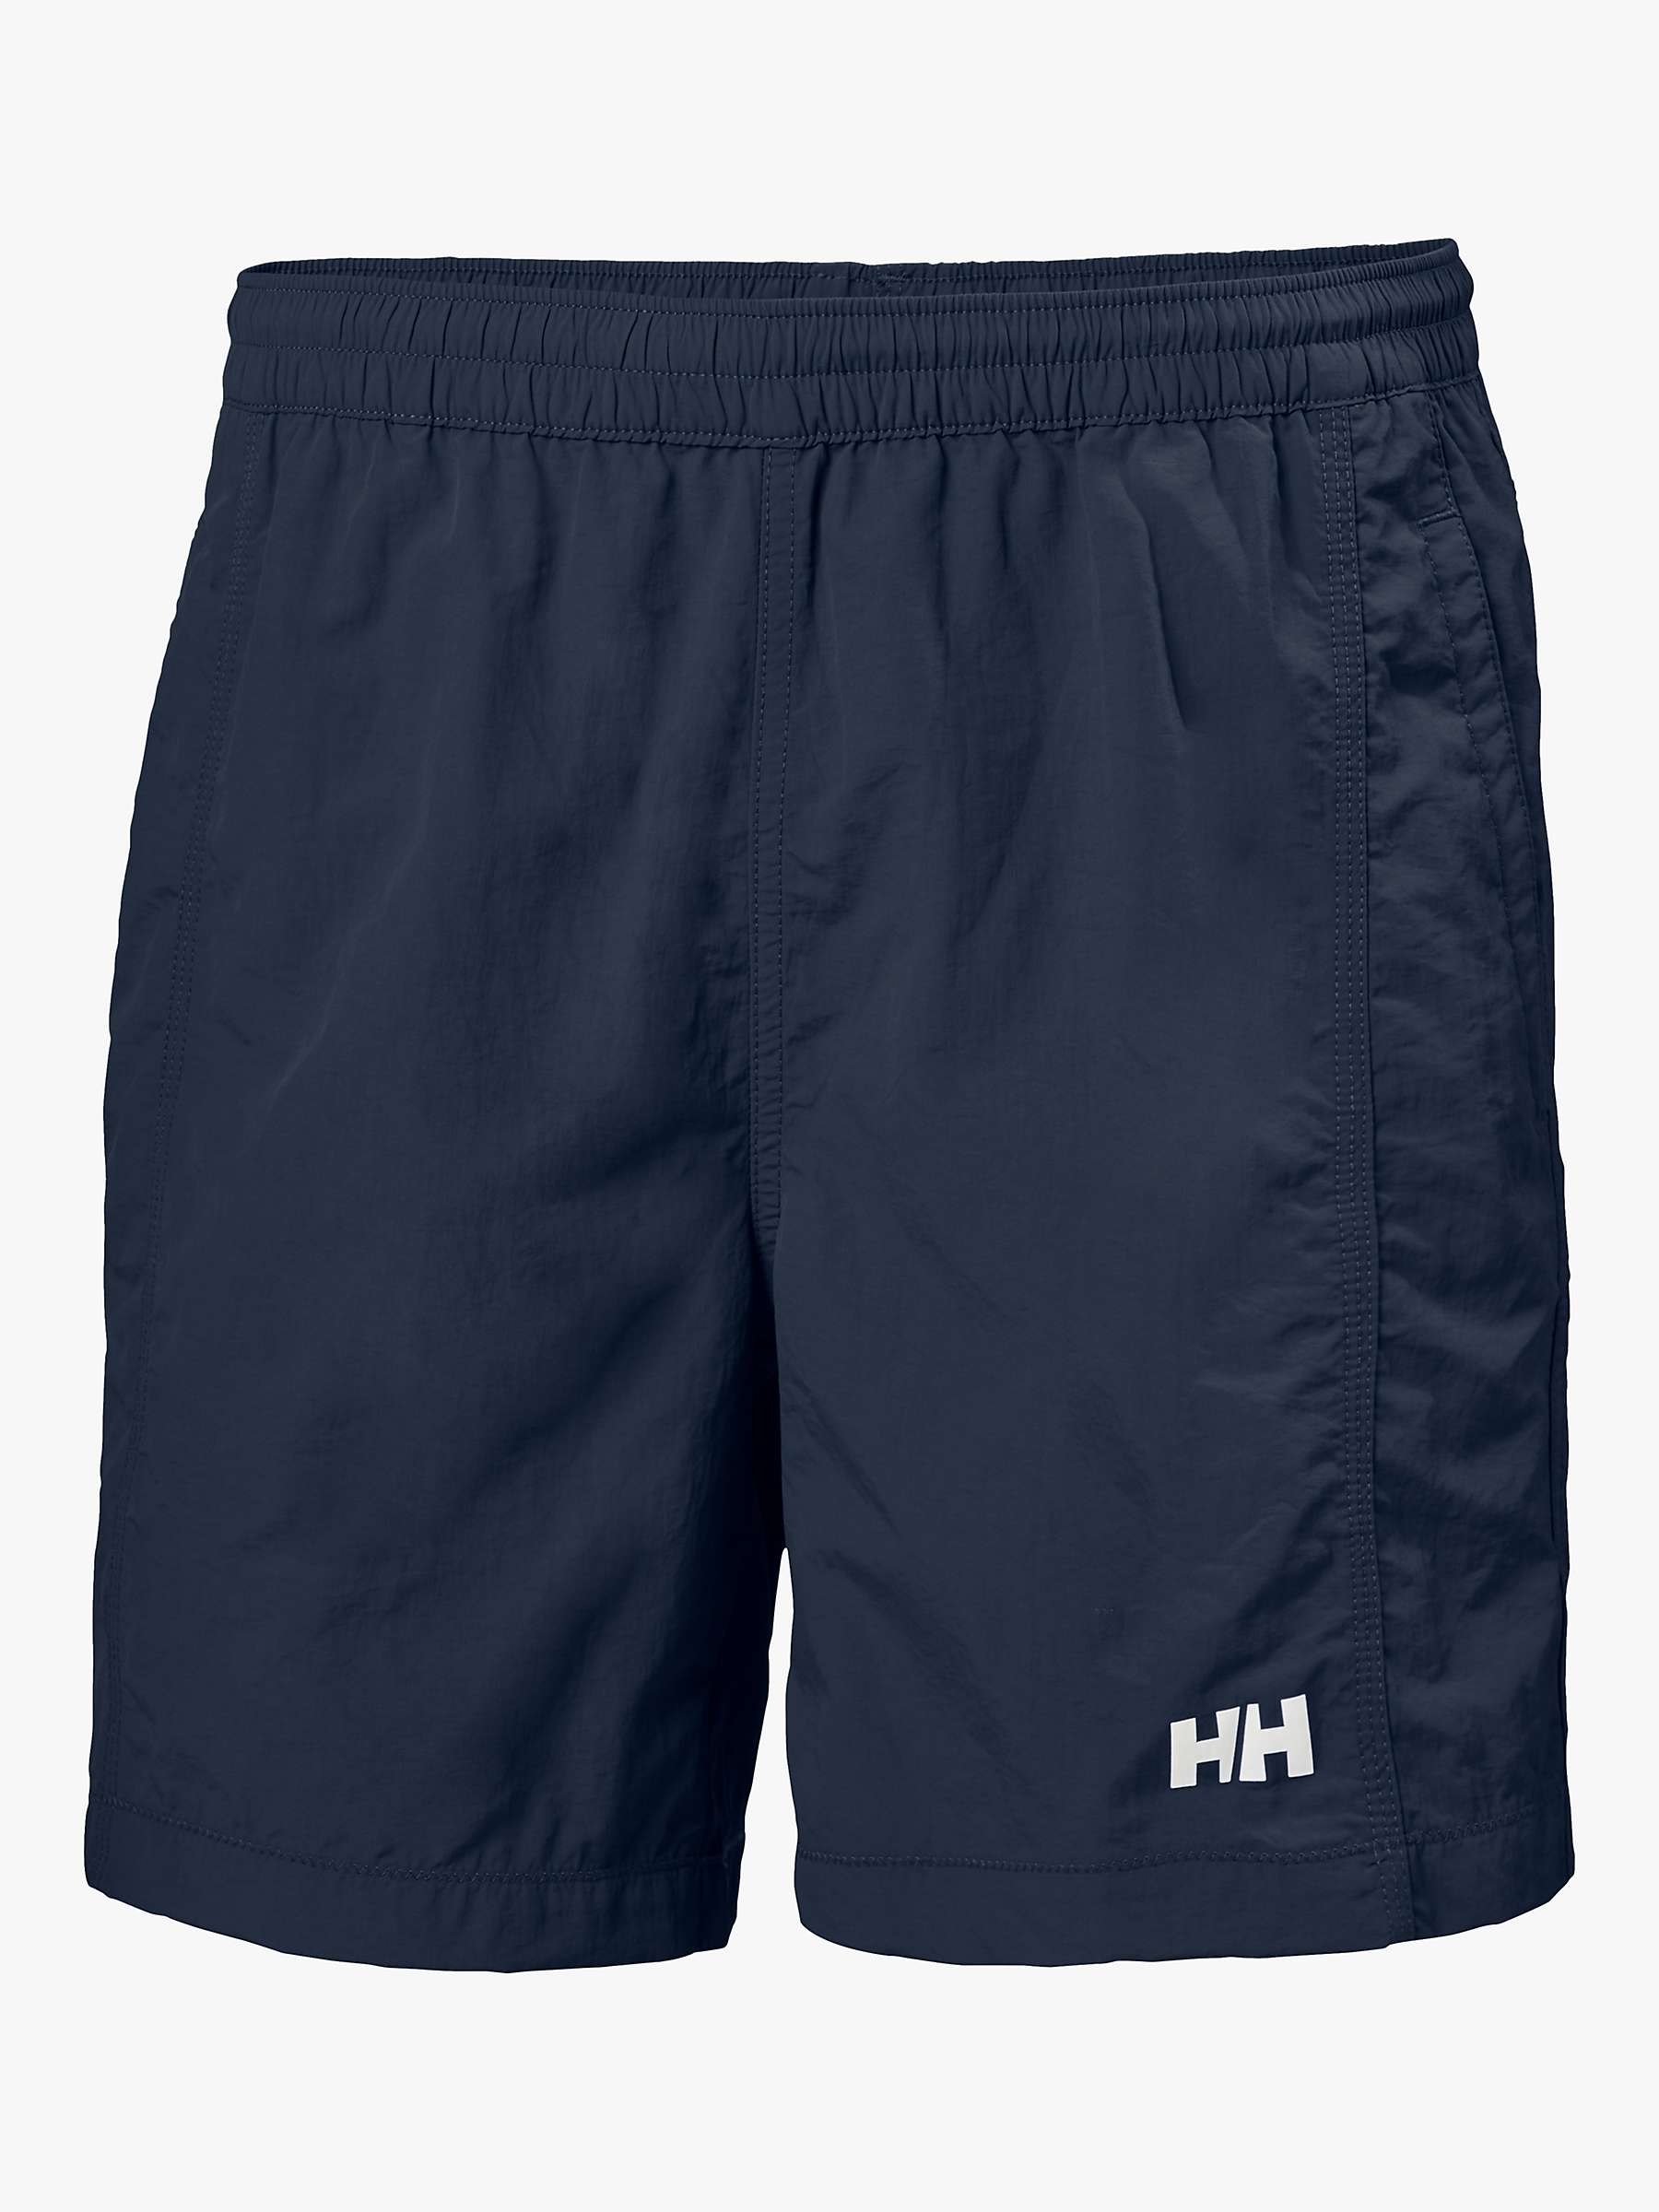 Buy Helly Hansen Men's Swim Shorts Online at johnlewis.com